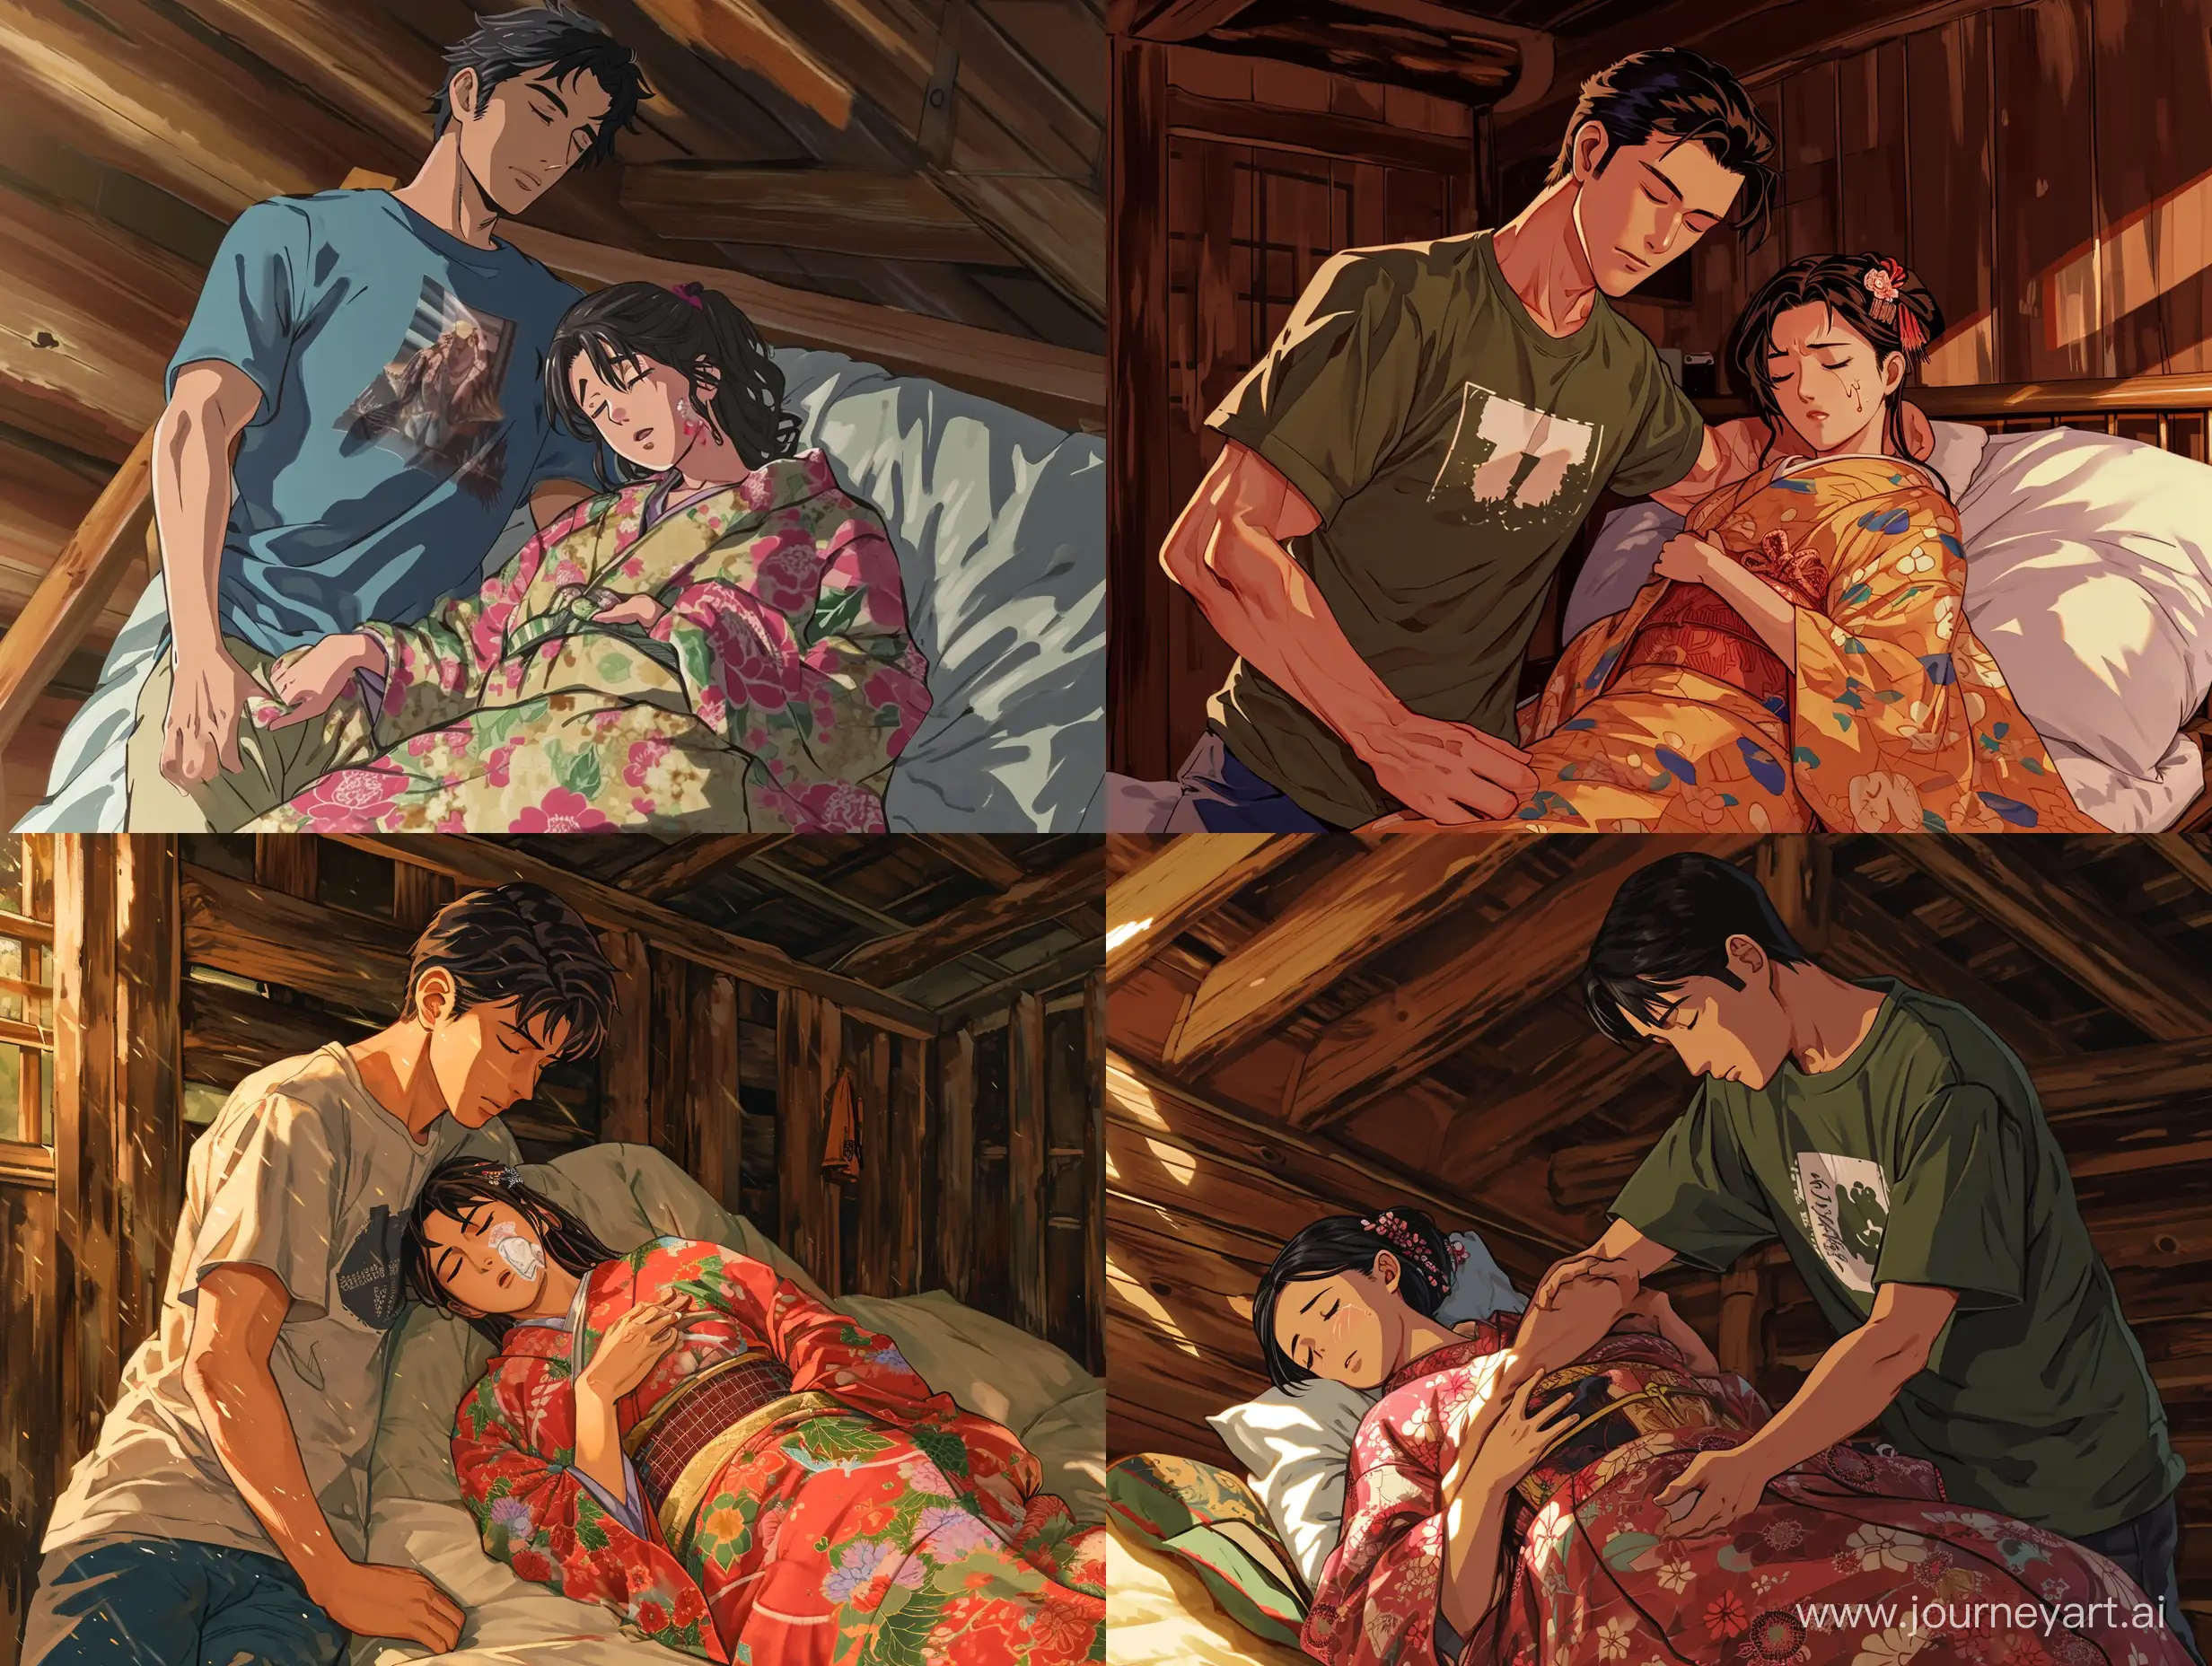 Caring-Anime-Scene-Man-Tending-to-Sick-Woman-in-Kimono-Inside-Wooden-Cabin